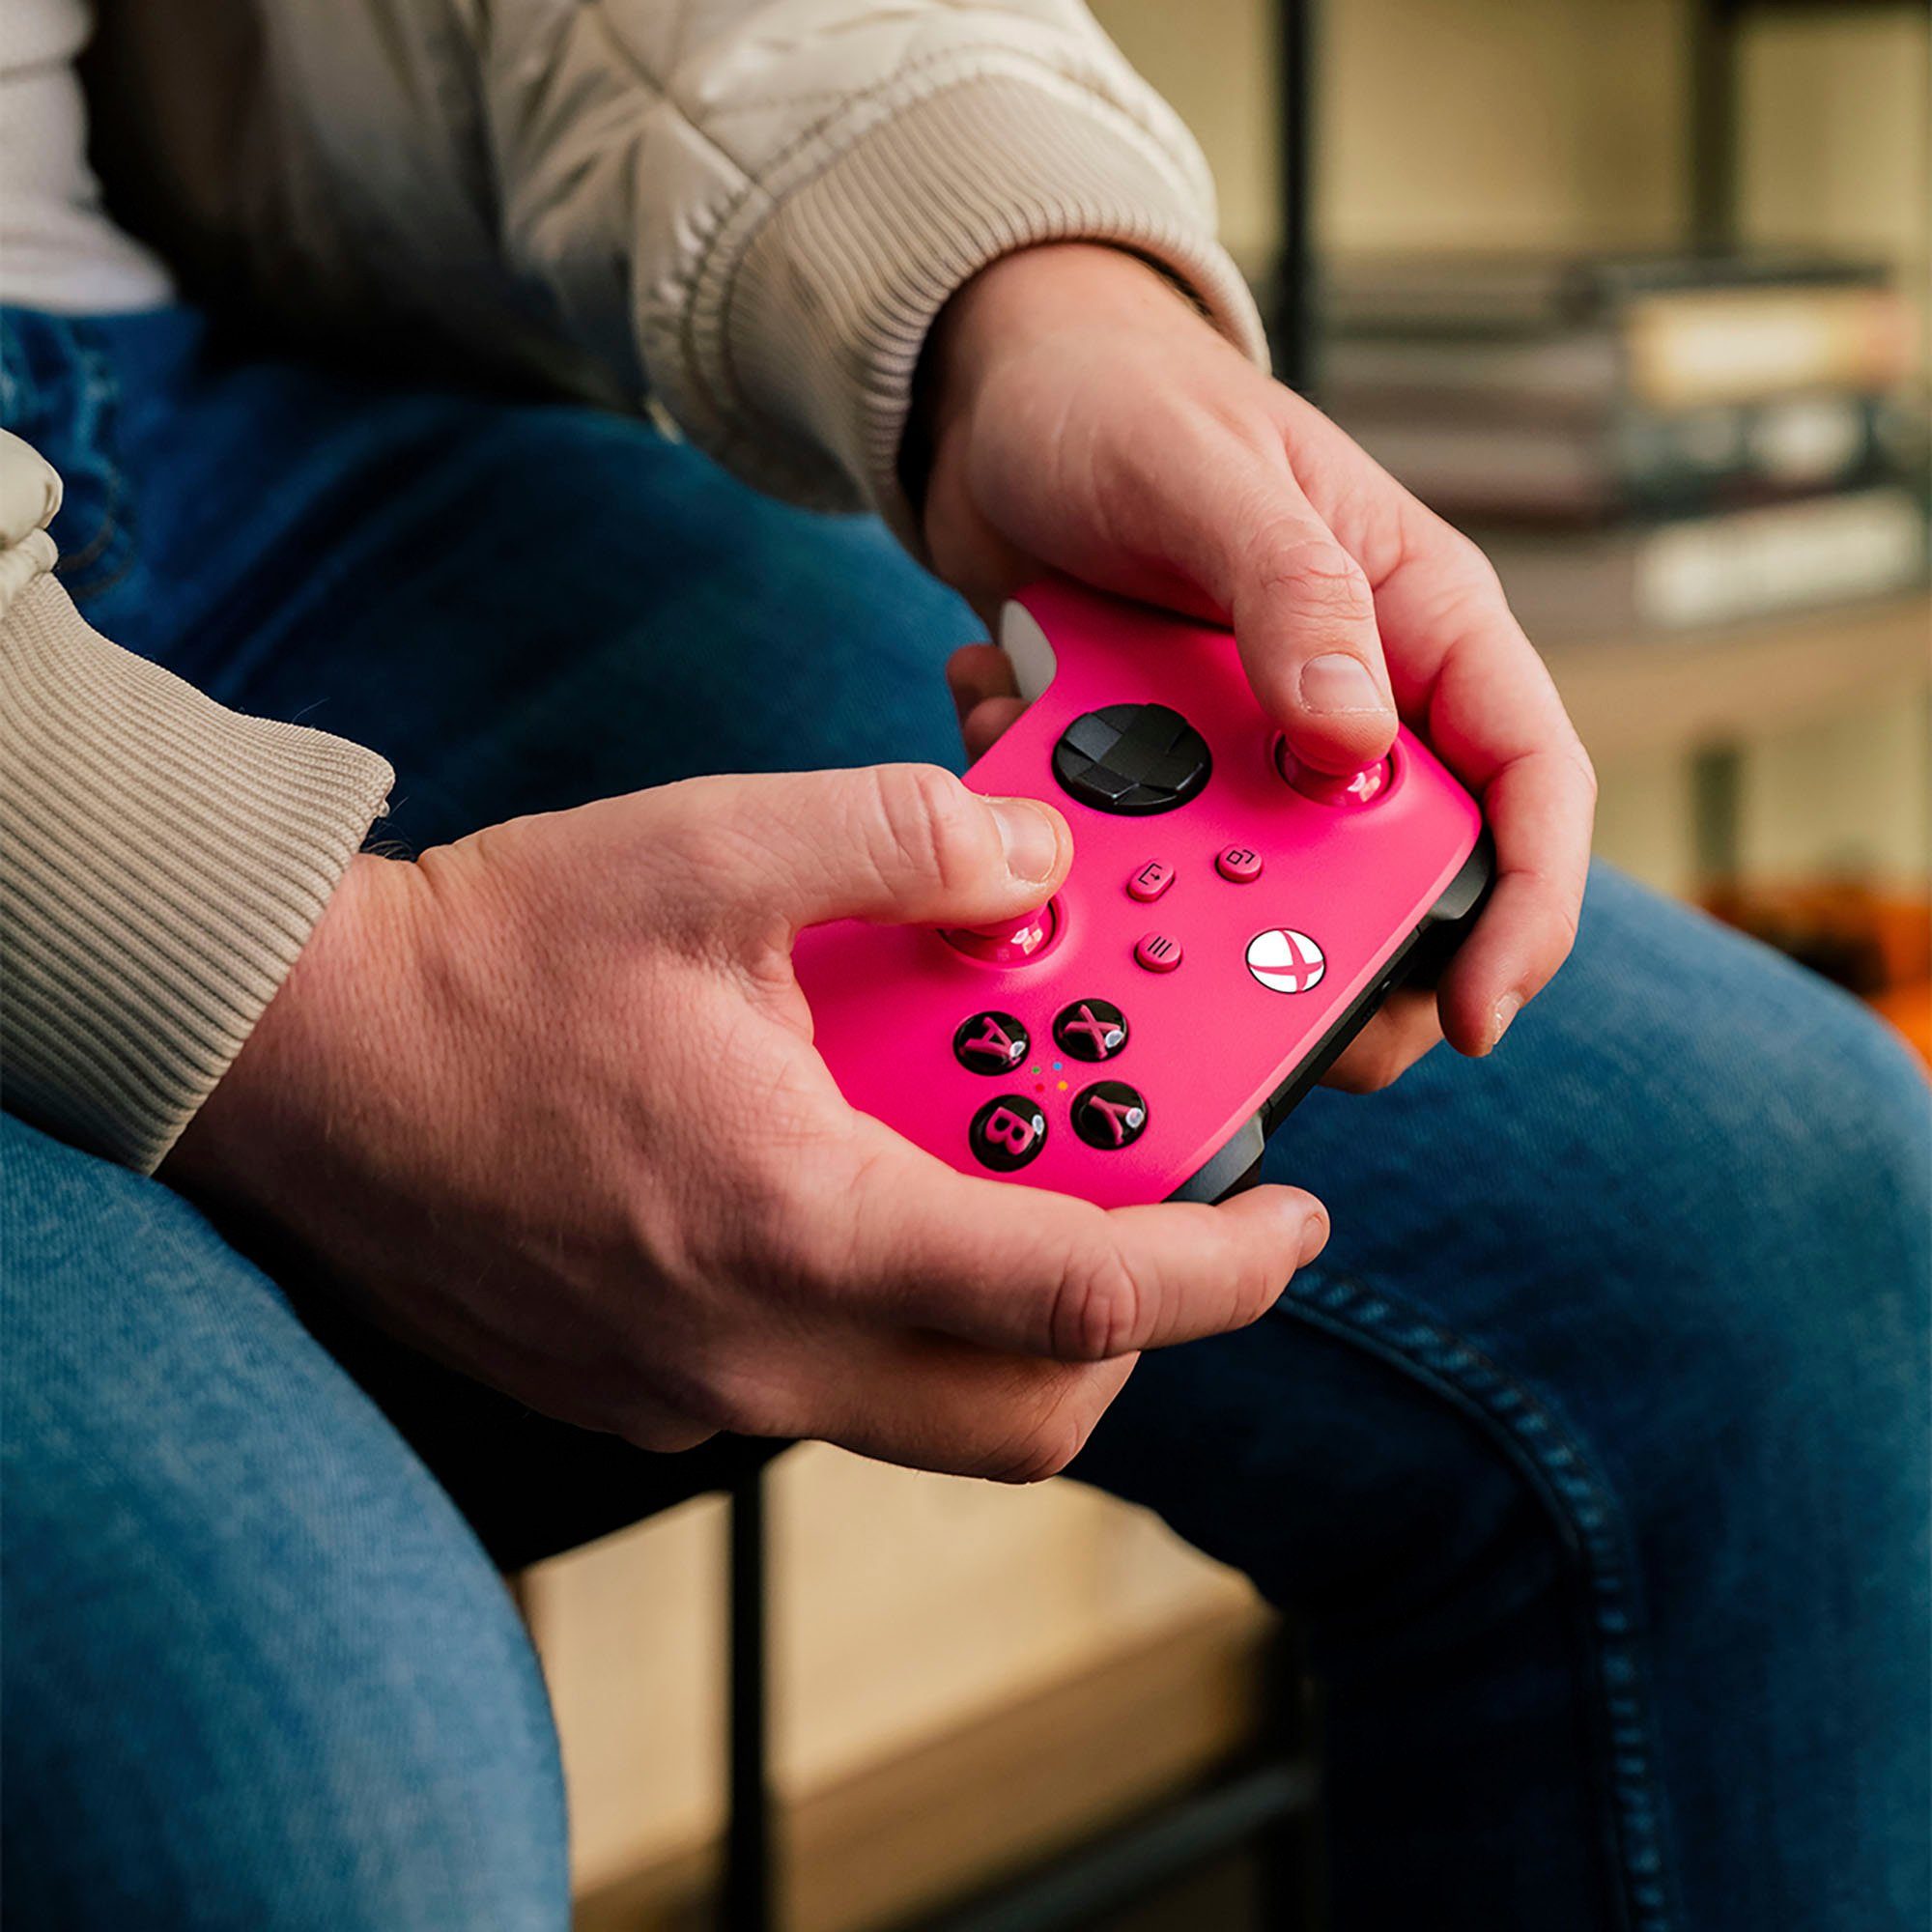 Pink Xbox Deep Wireless-Controller